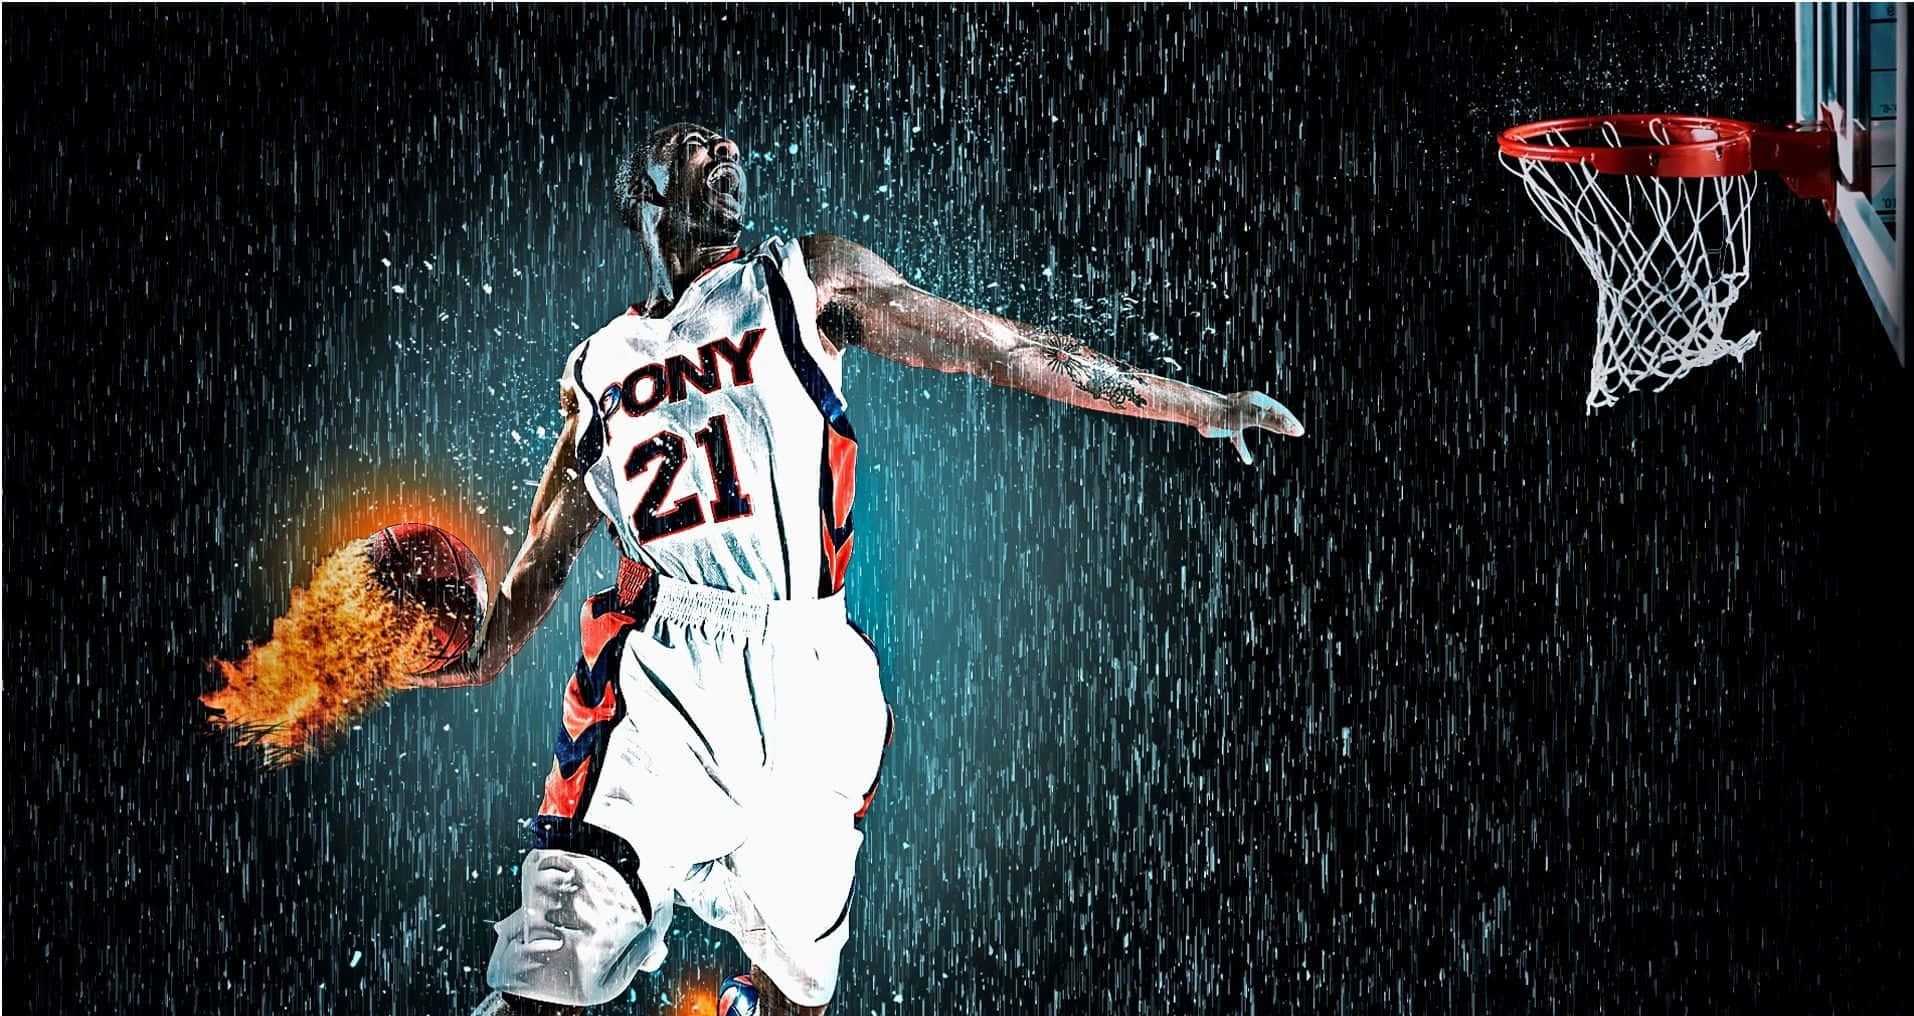 Basketball Player Shoot Digital Art Background